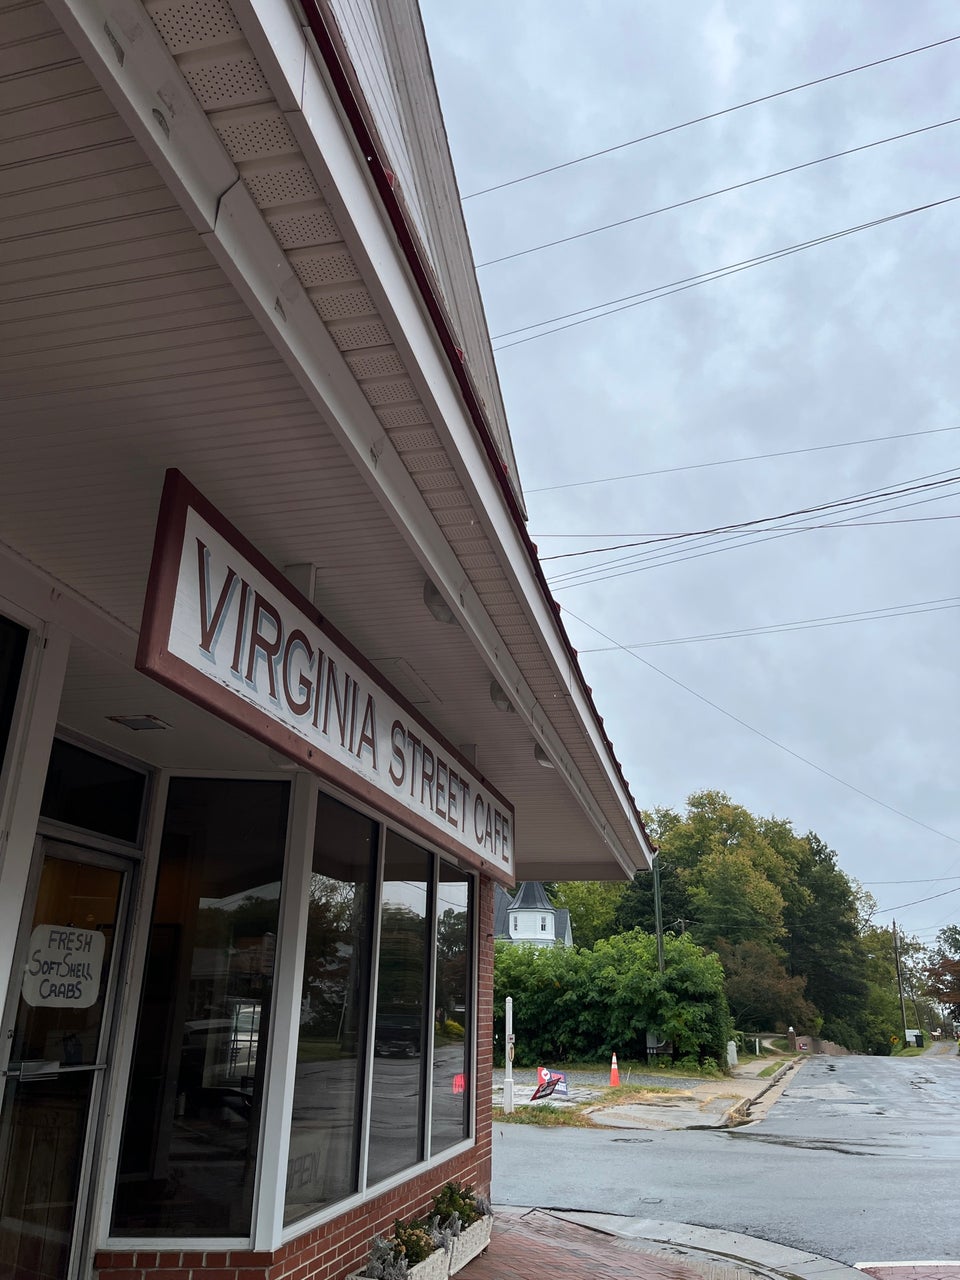 Virginia Street Cafe